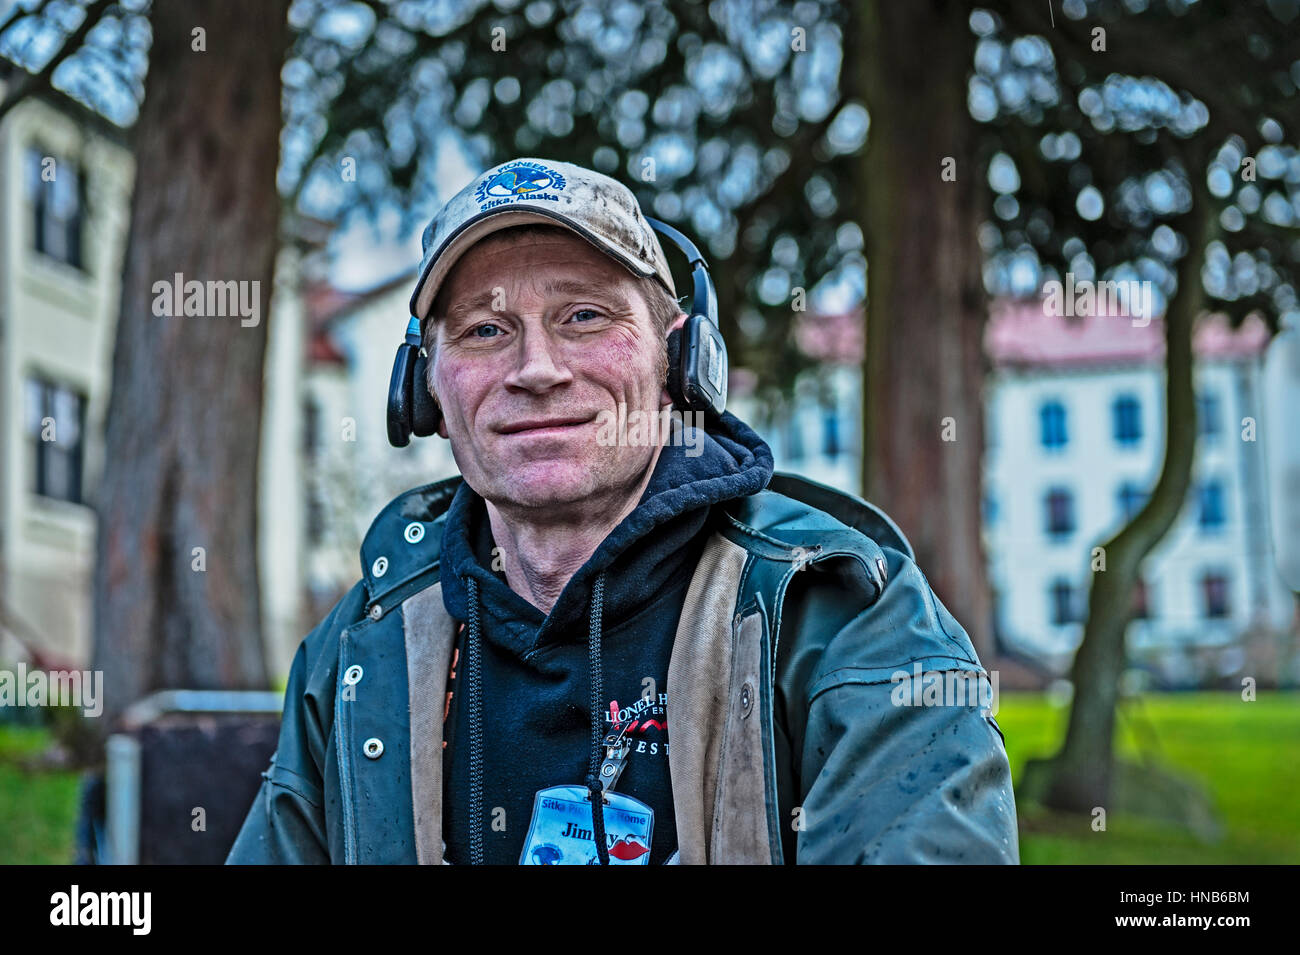 Jimmy il giardiniere al Sitka Pioneer Home in Sitka, Alaska, Stati Uniti d'America. Fotografia di Jeffrey Wickett, NorthLight fotografia. https://northlight.blog/ Foto Stock